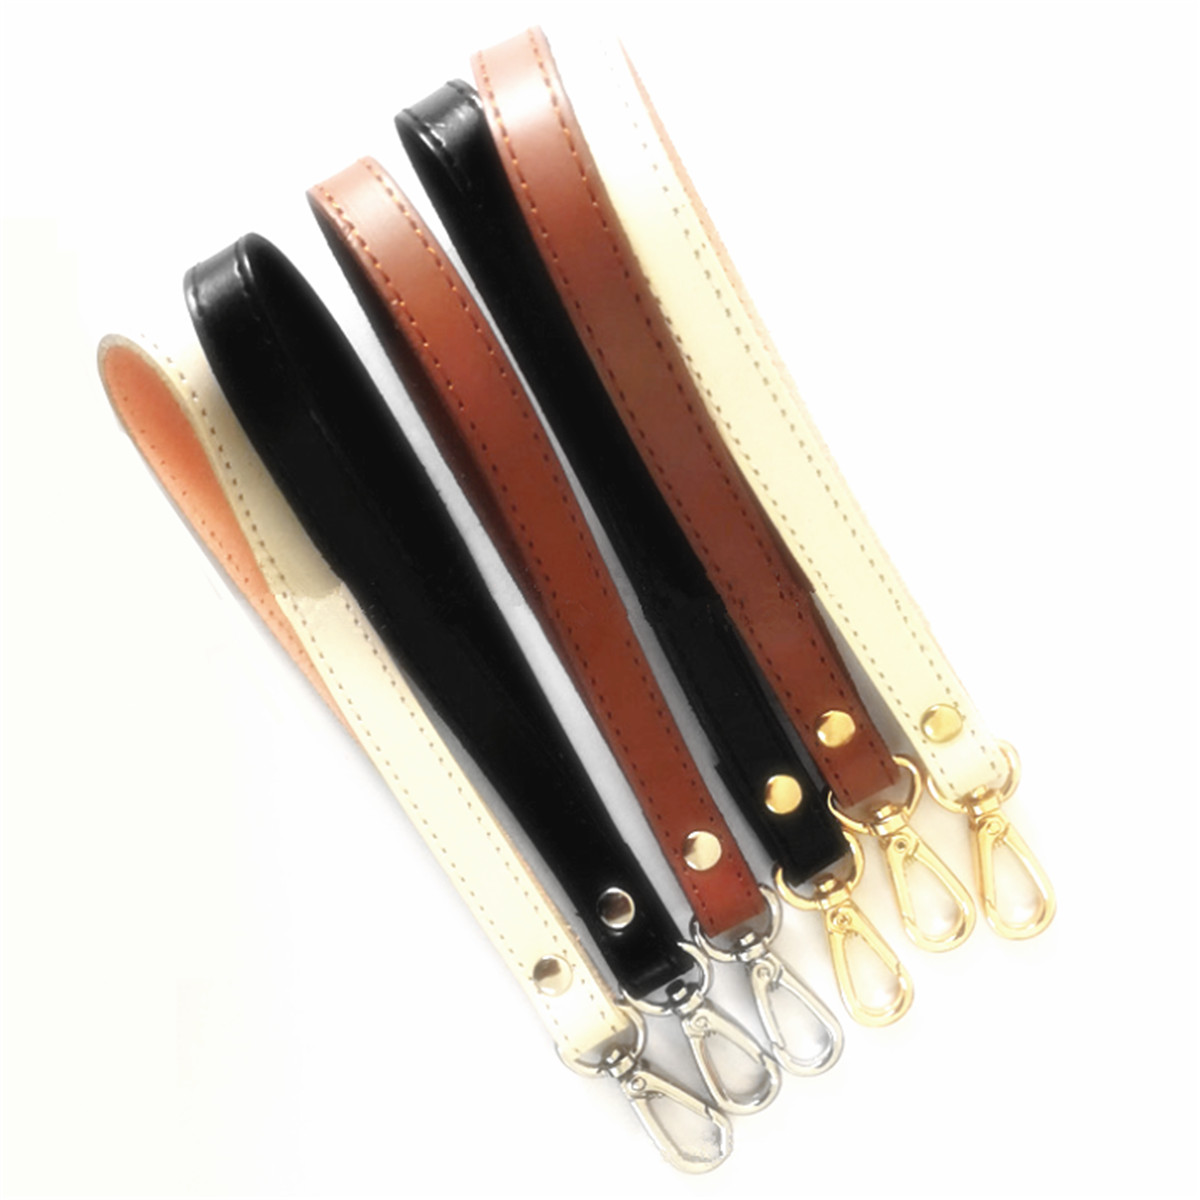 1pcs Leather Wristlet Wrist Bag Strap Replacement For Clutch Purse Handbag Bag | eBay